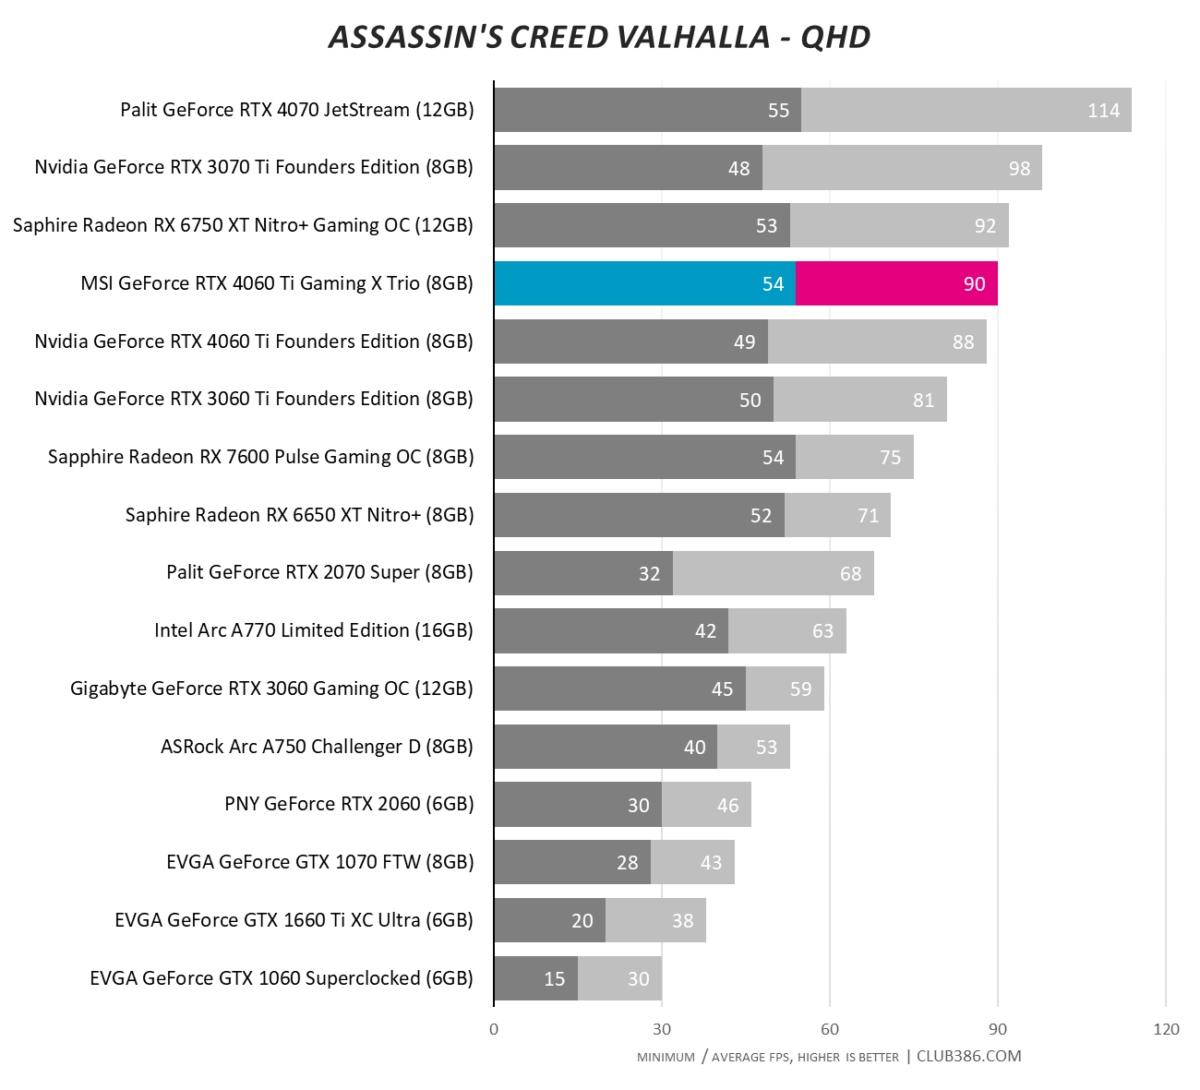 MSI GeForce RTX 4060 Ti Gaming X Trio - Assassin's Creed Valhalla - QHD